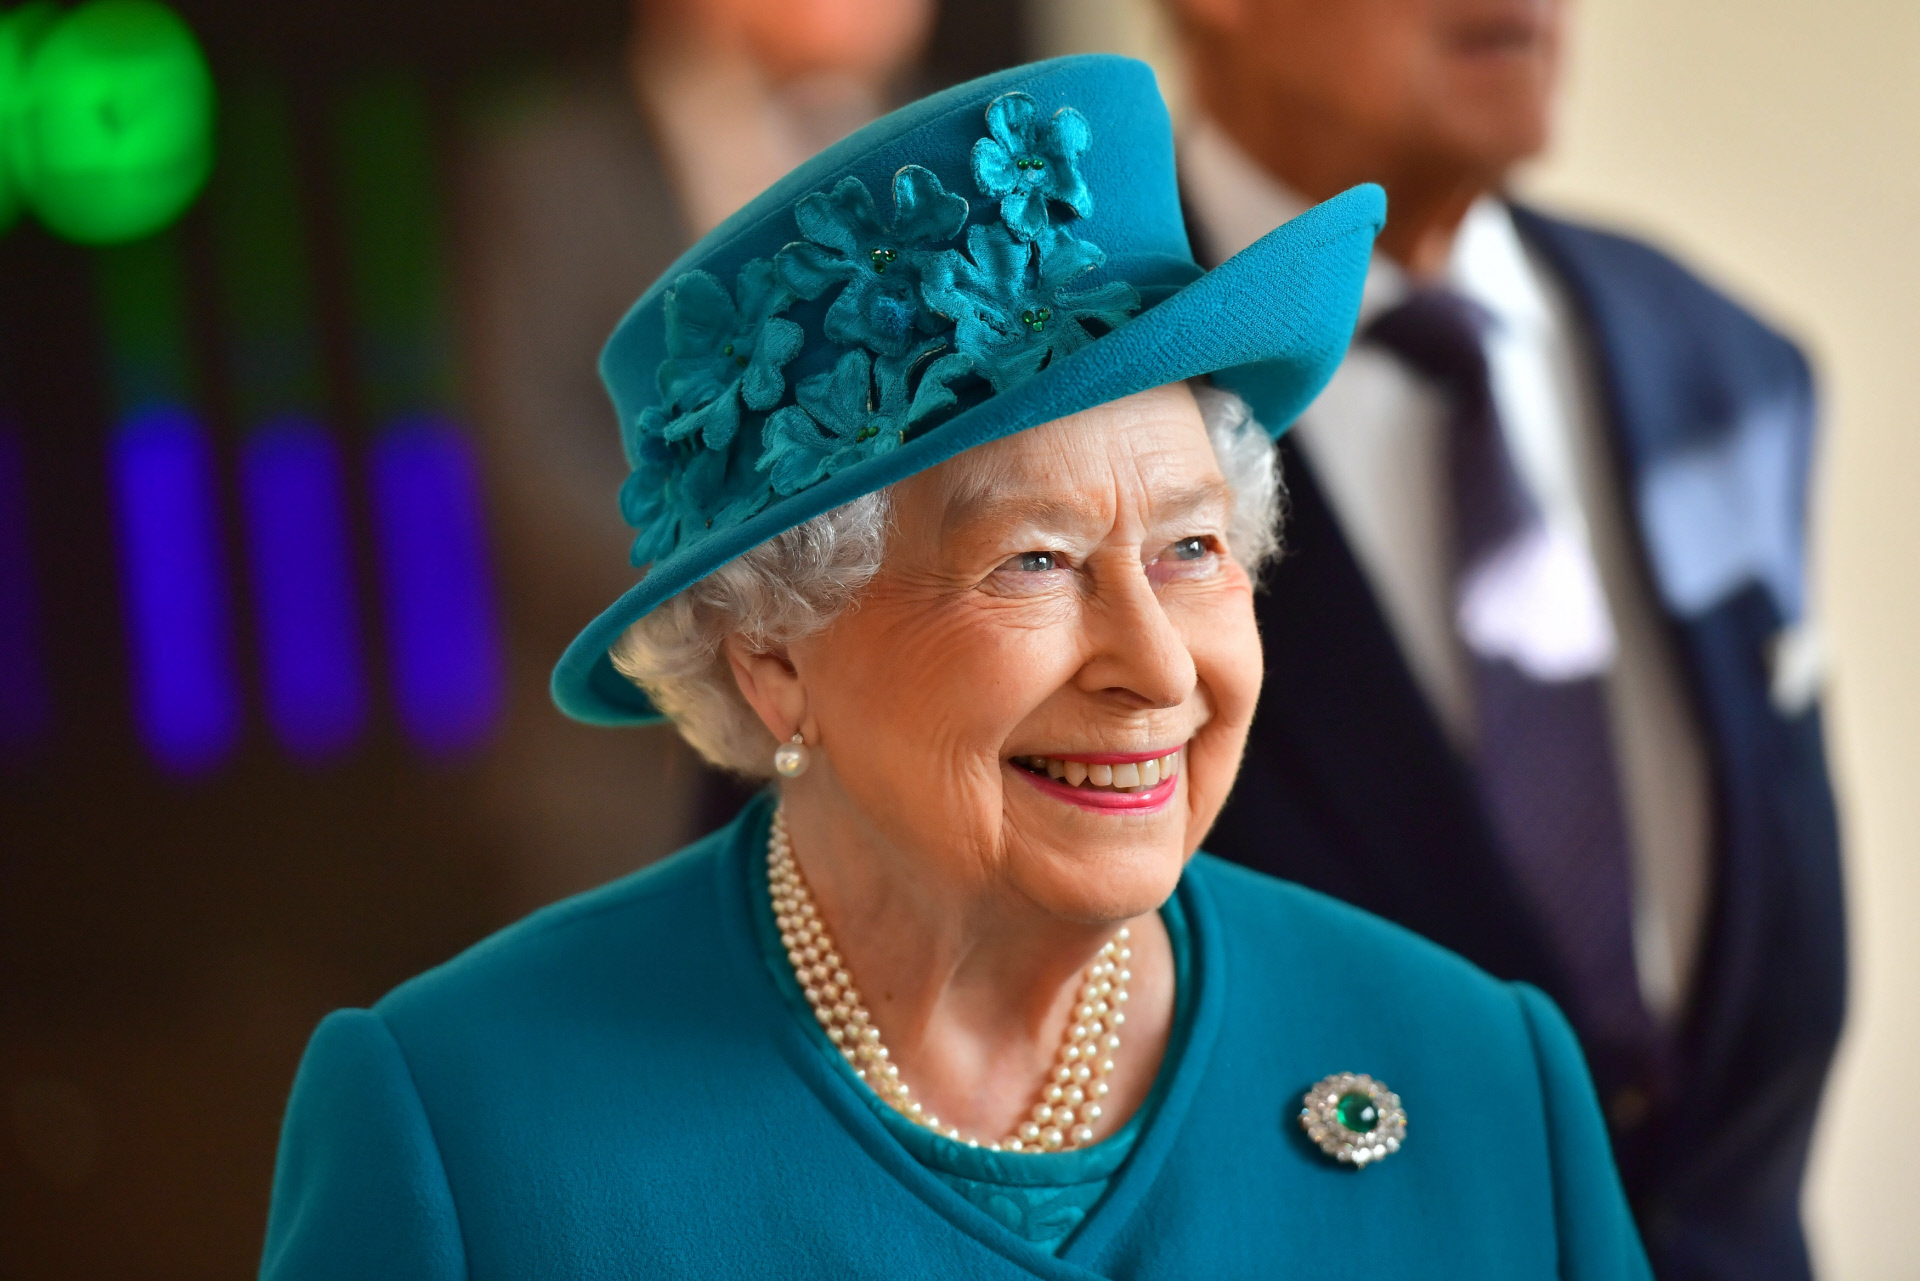 Reina Isabel II del Reino Unido